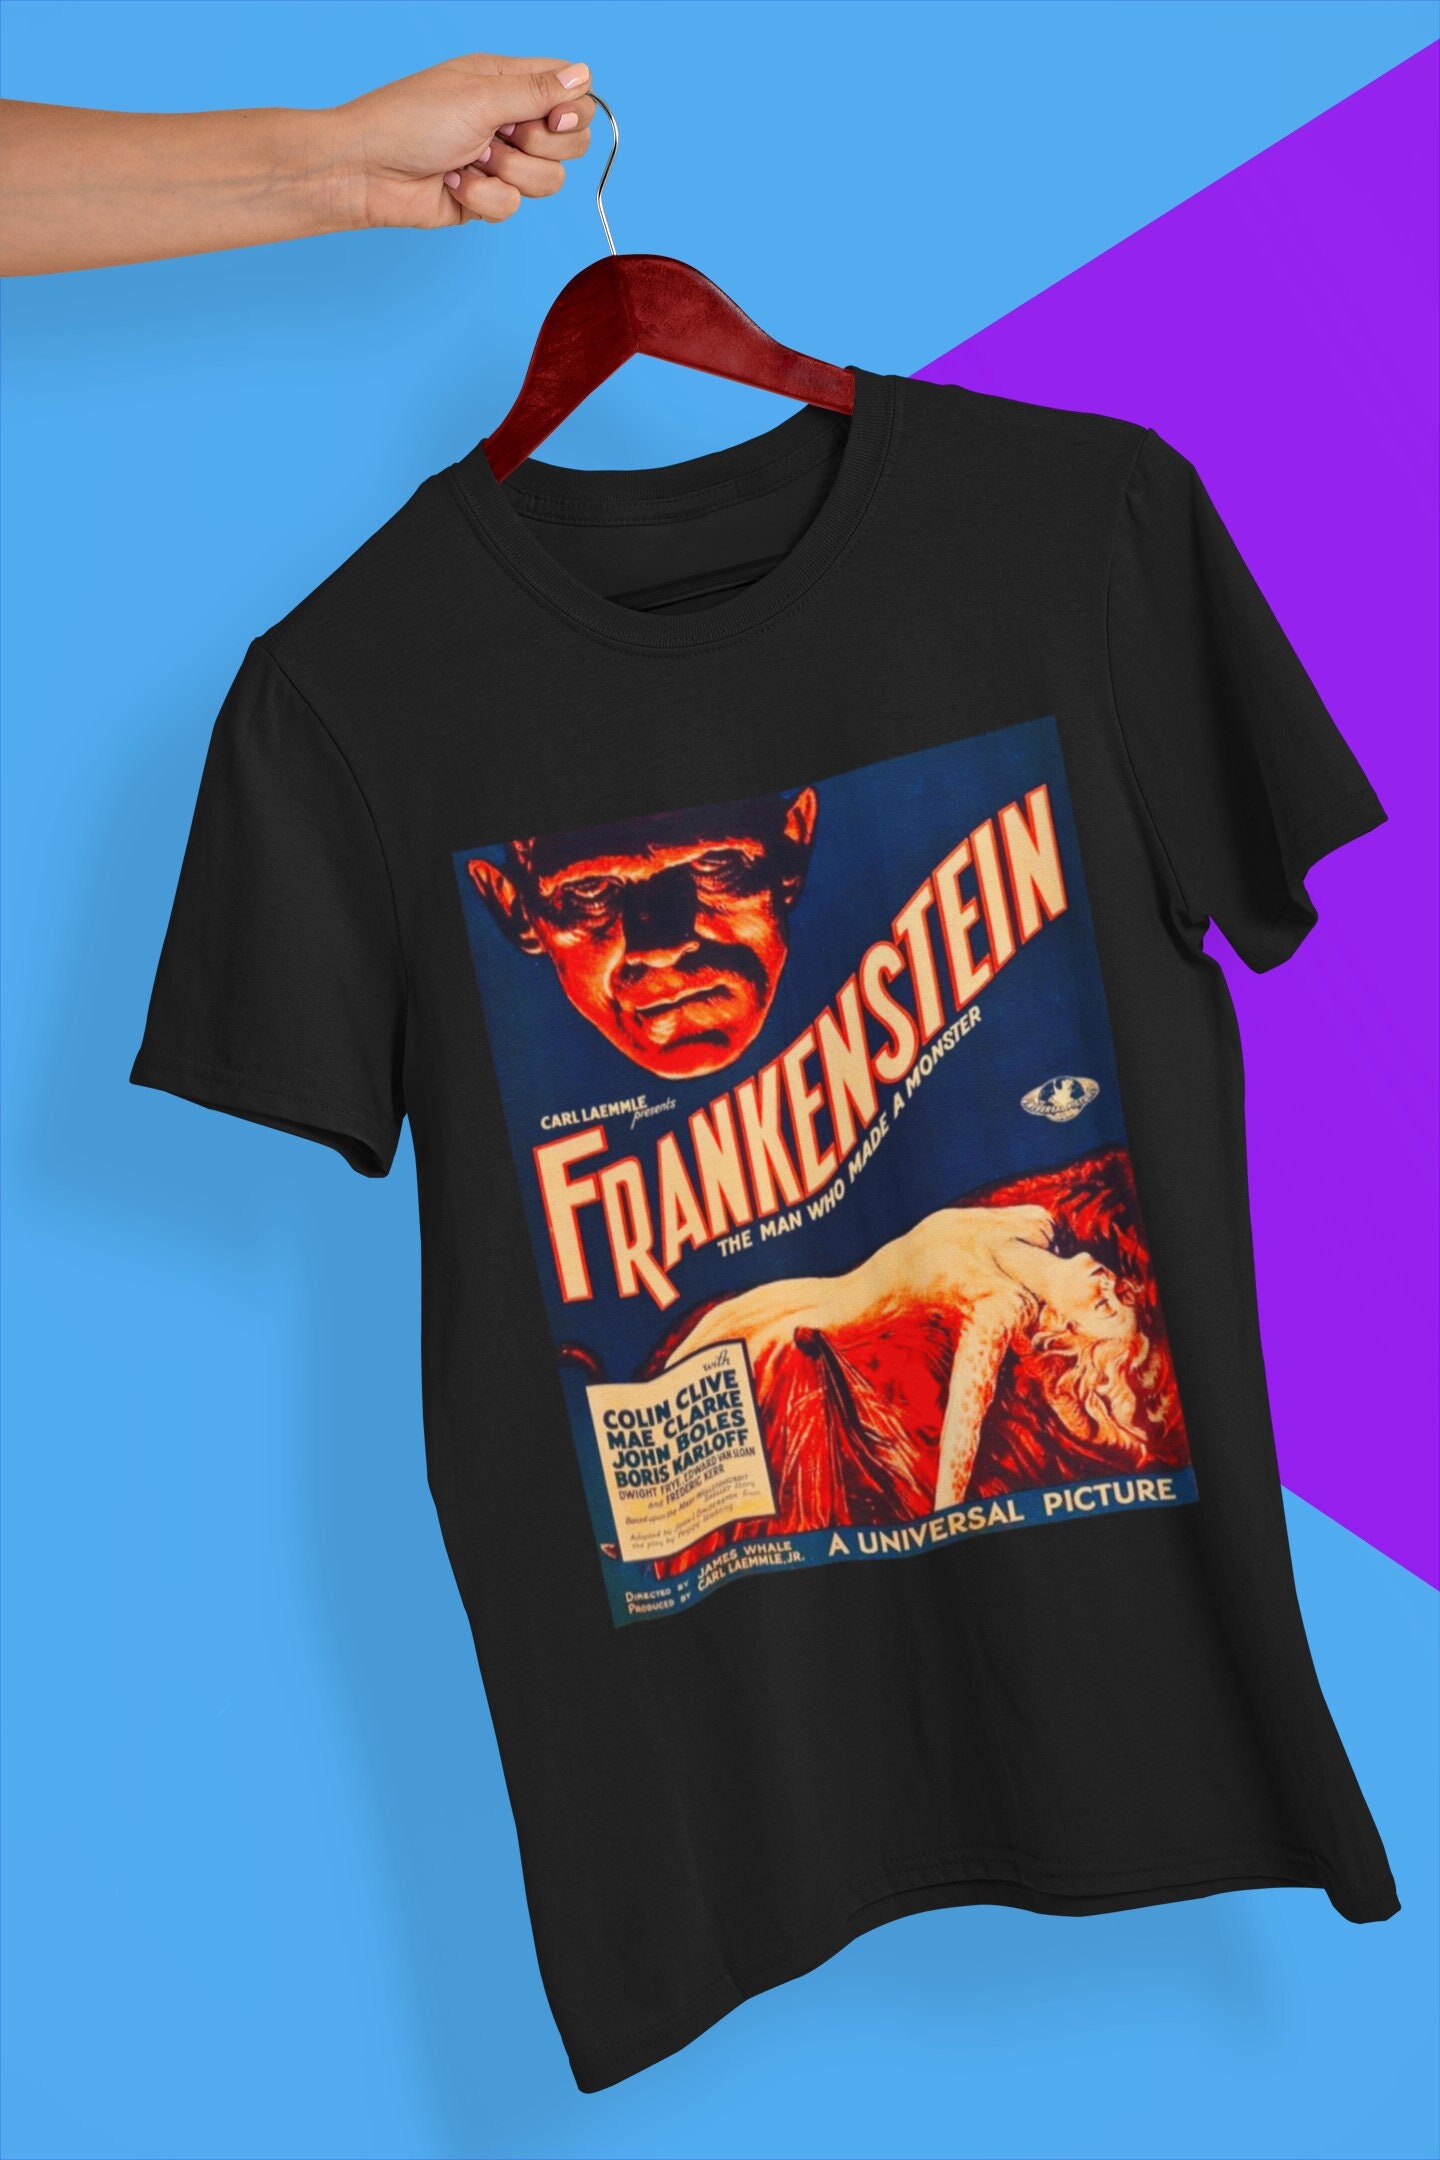 Discover Frankenstein T-Shirt, Classic Monster Movie Poster T Shirt